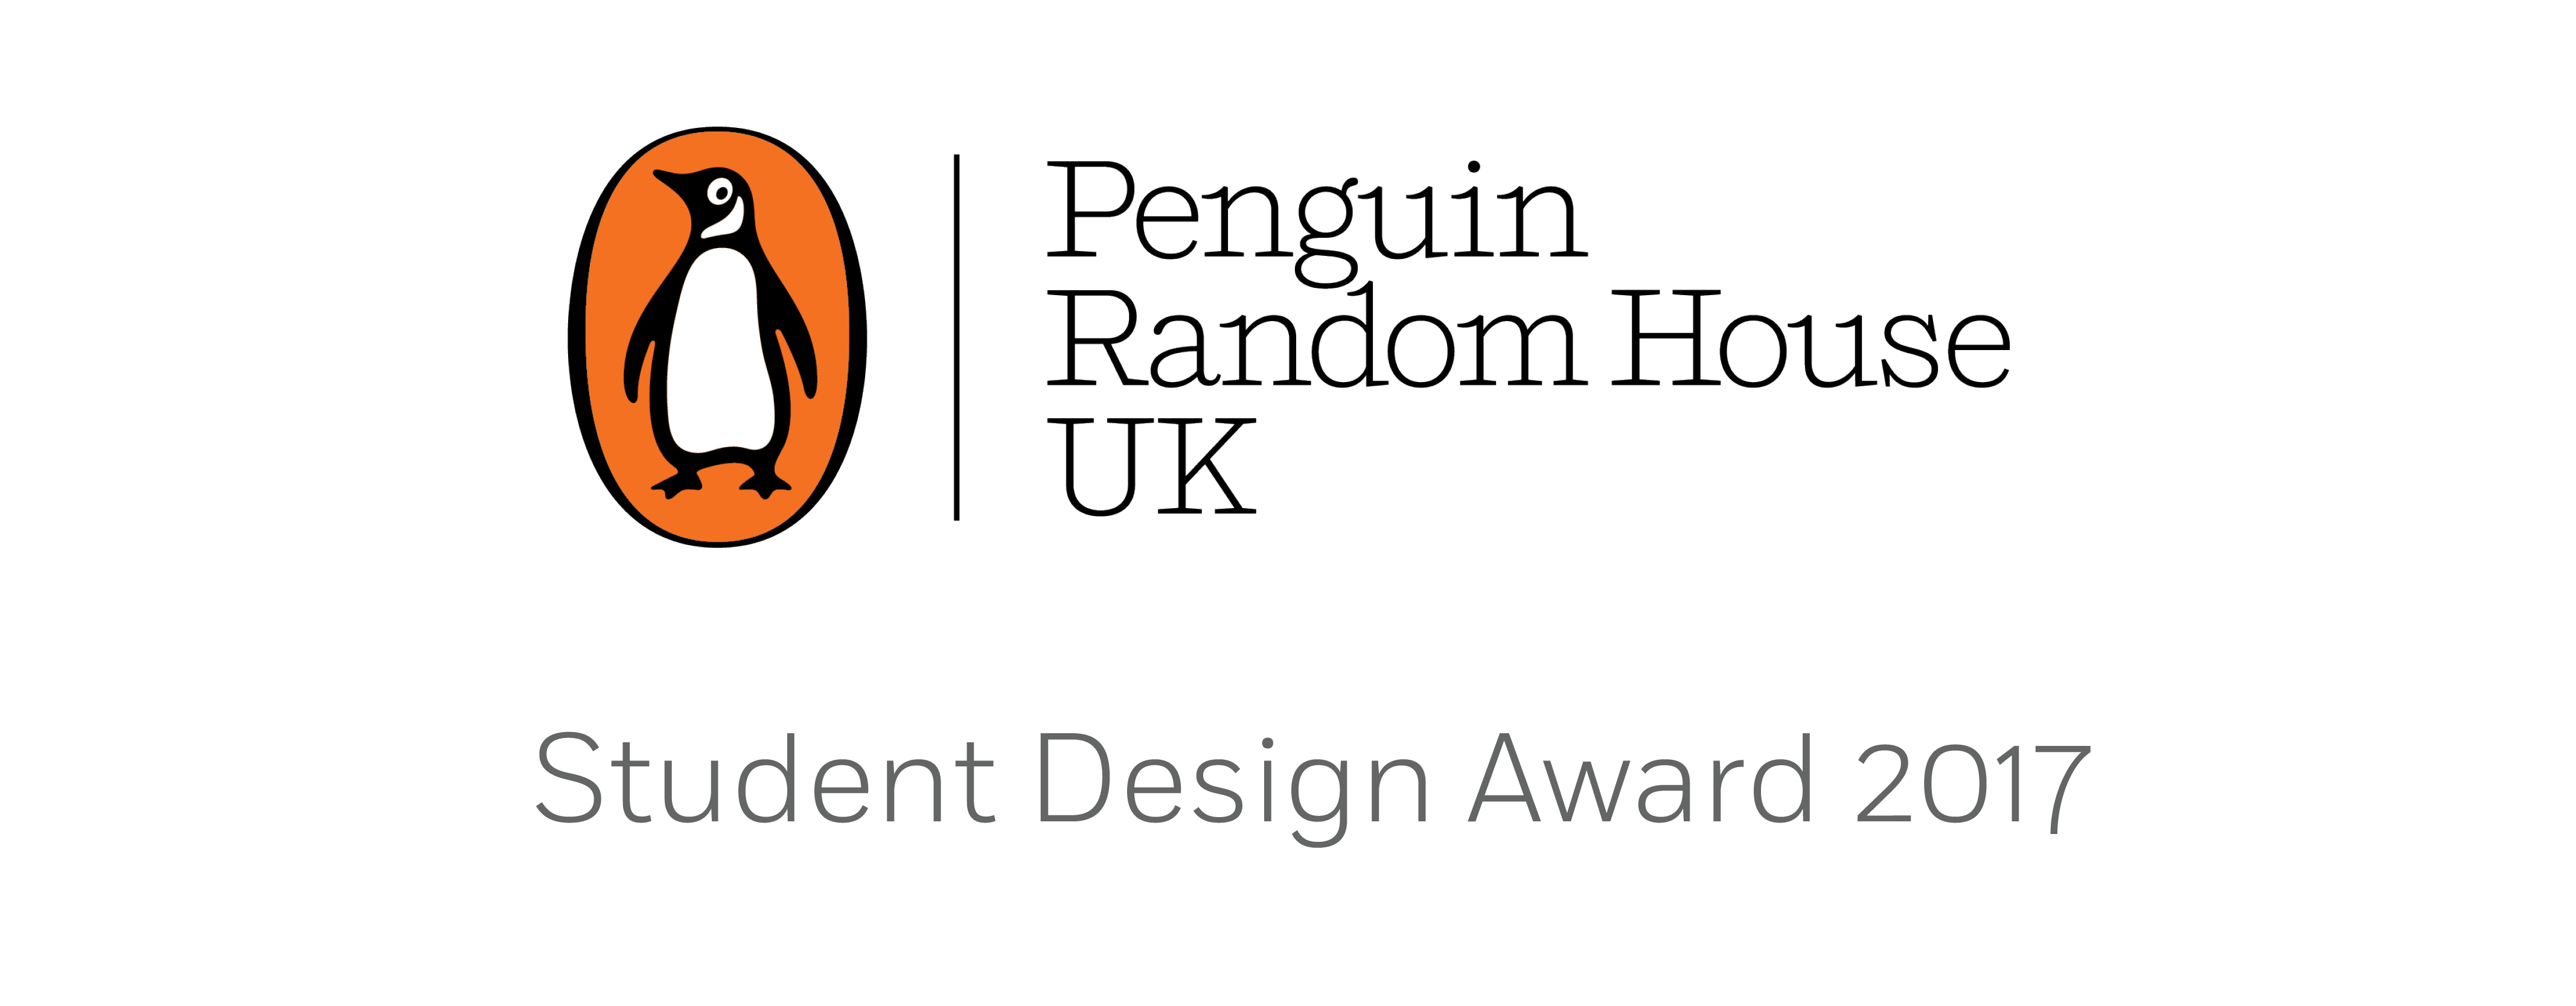  Student Design Award 2017  